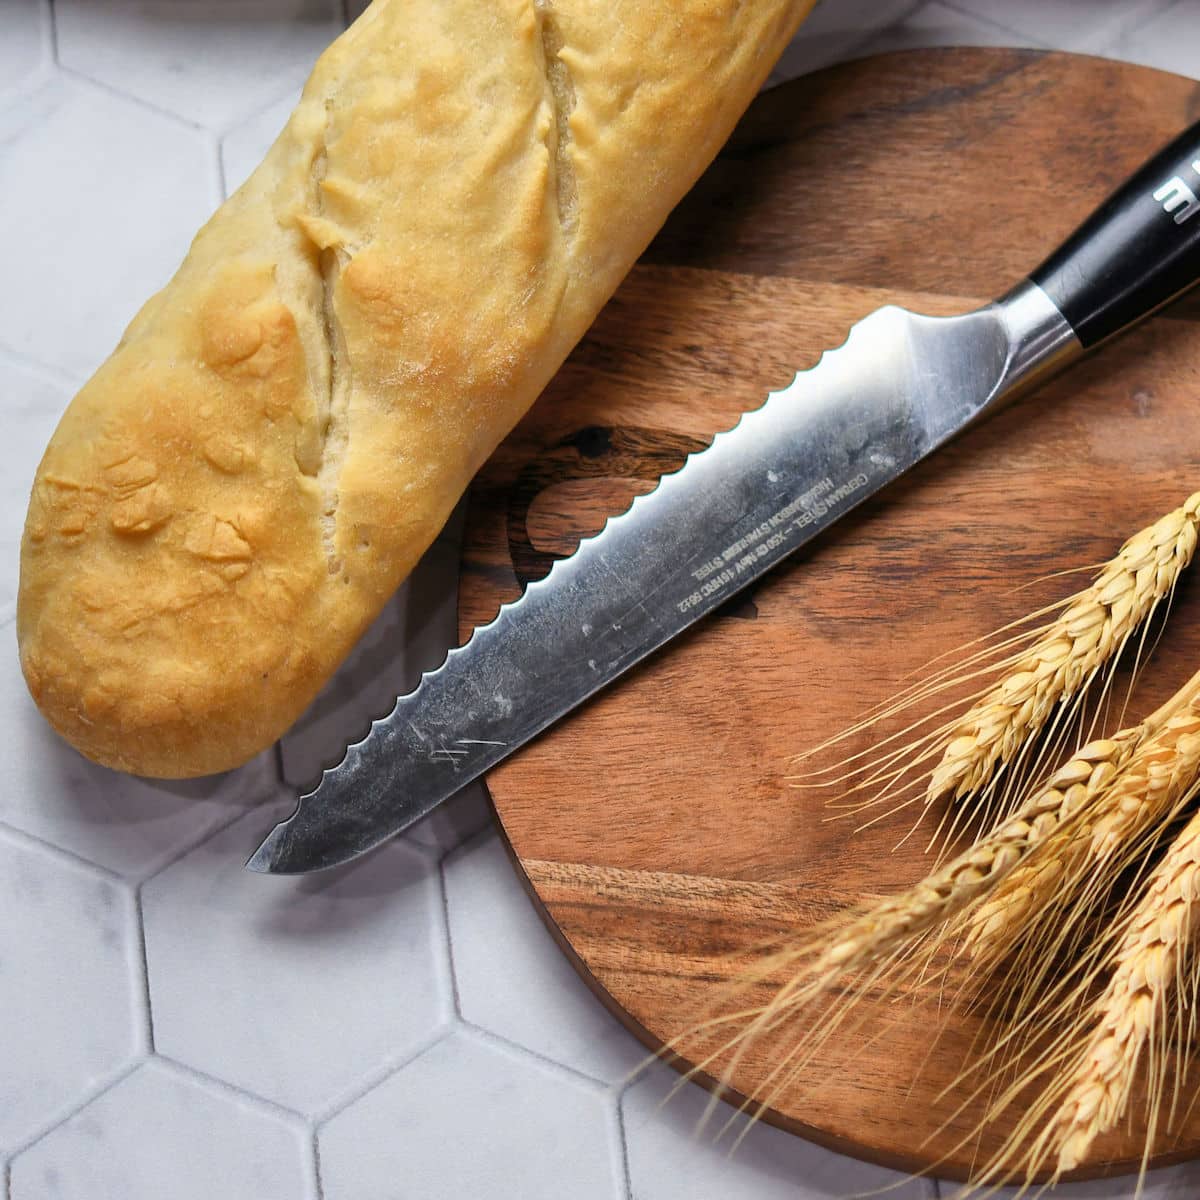 Baguette Recipe Bread Machine Easy Homemade by Christian Guzman on 24Bite